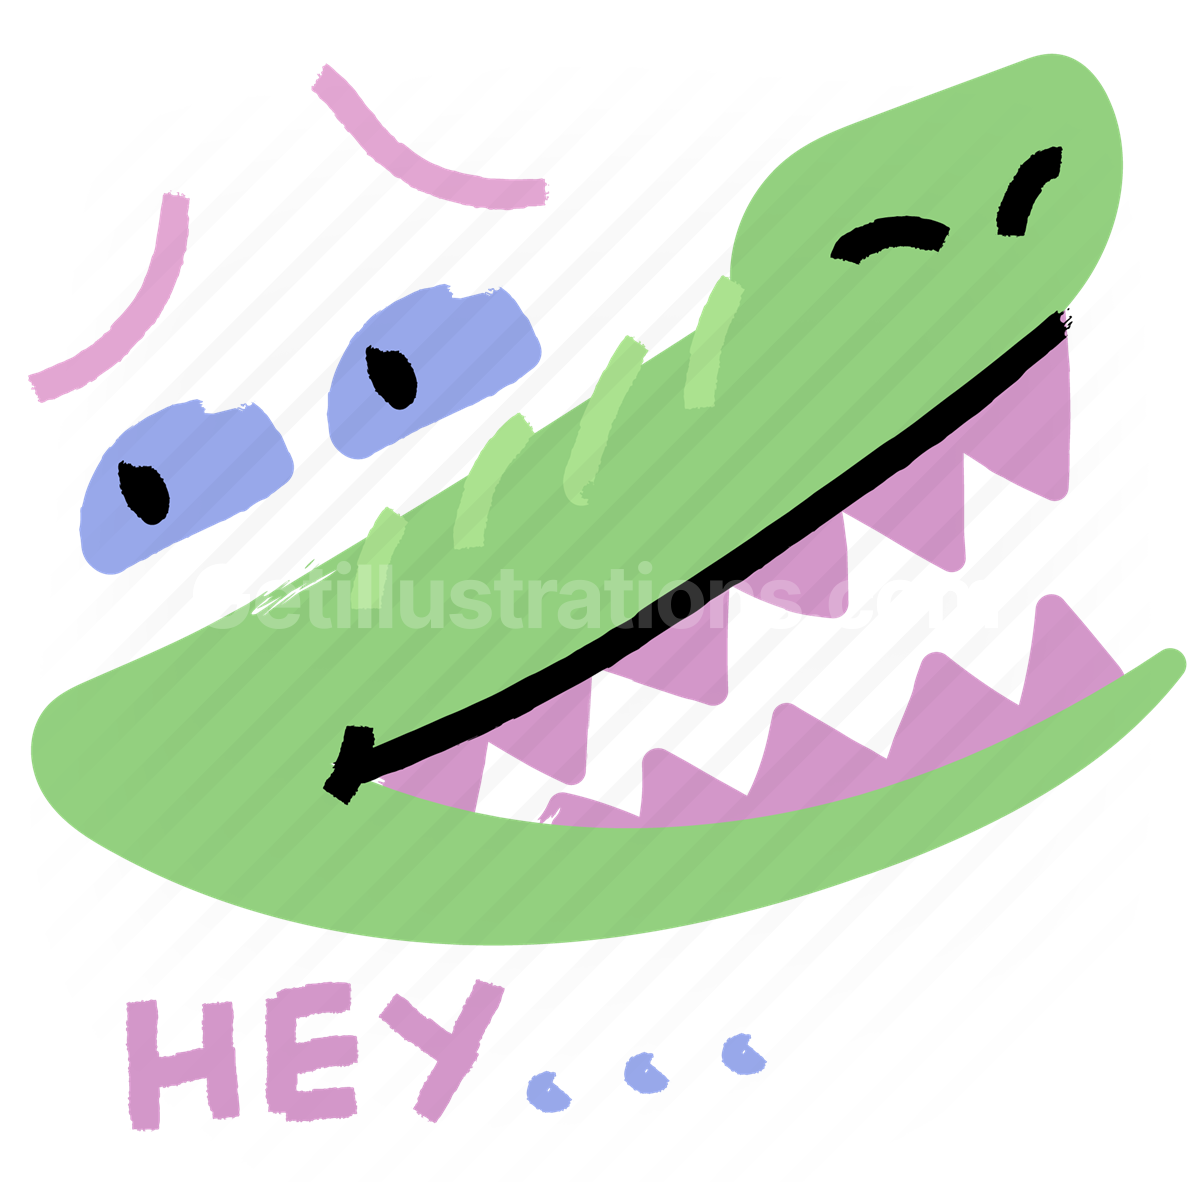 crocodile, alligator, hey, greeting, animal, wildlife, sticker, character